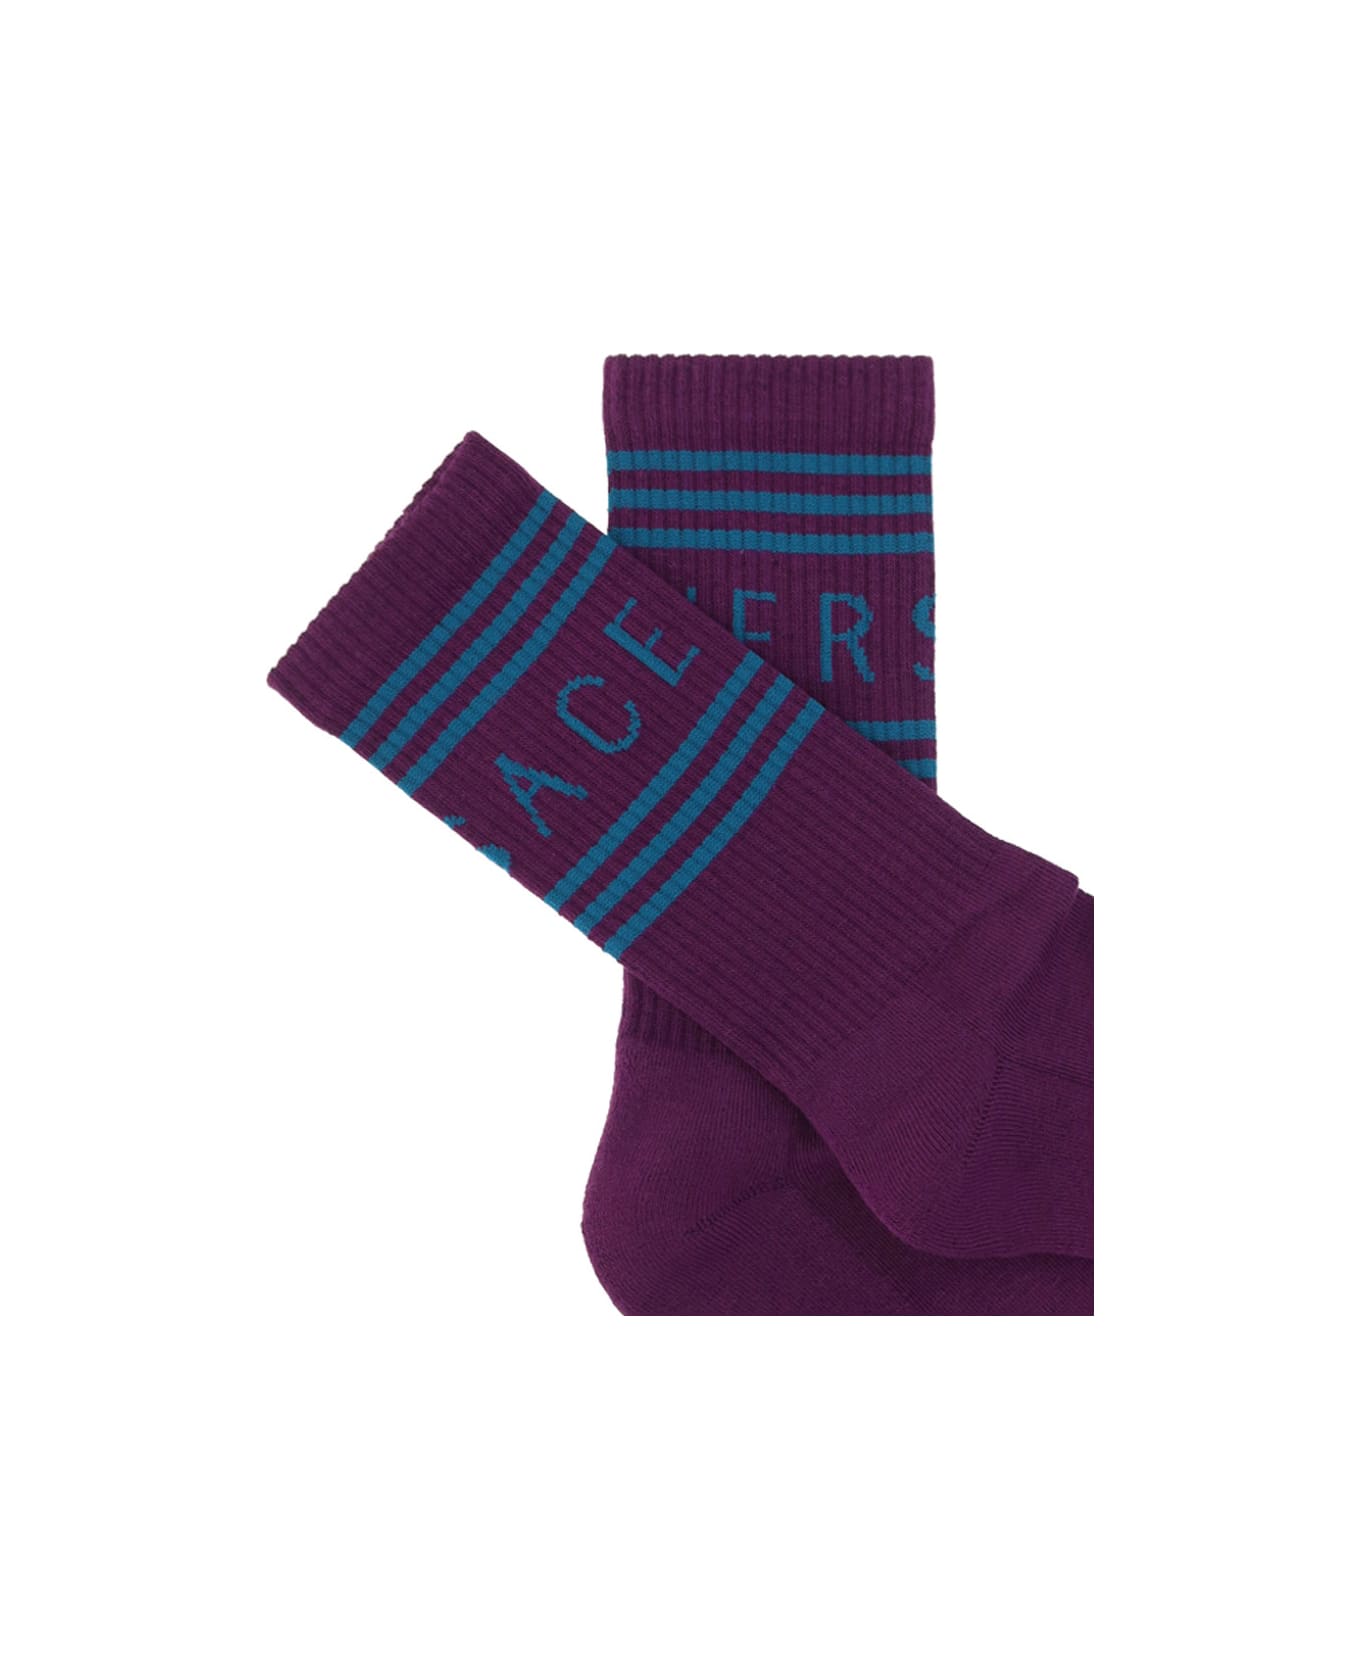 Versace Athletic Socks - Plum+teal